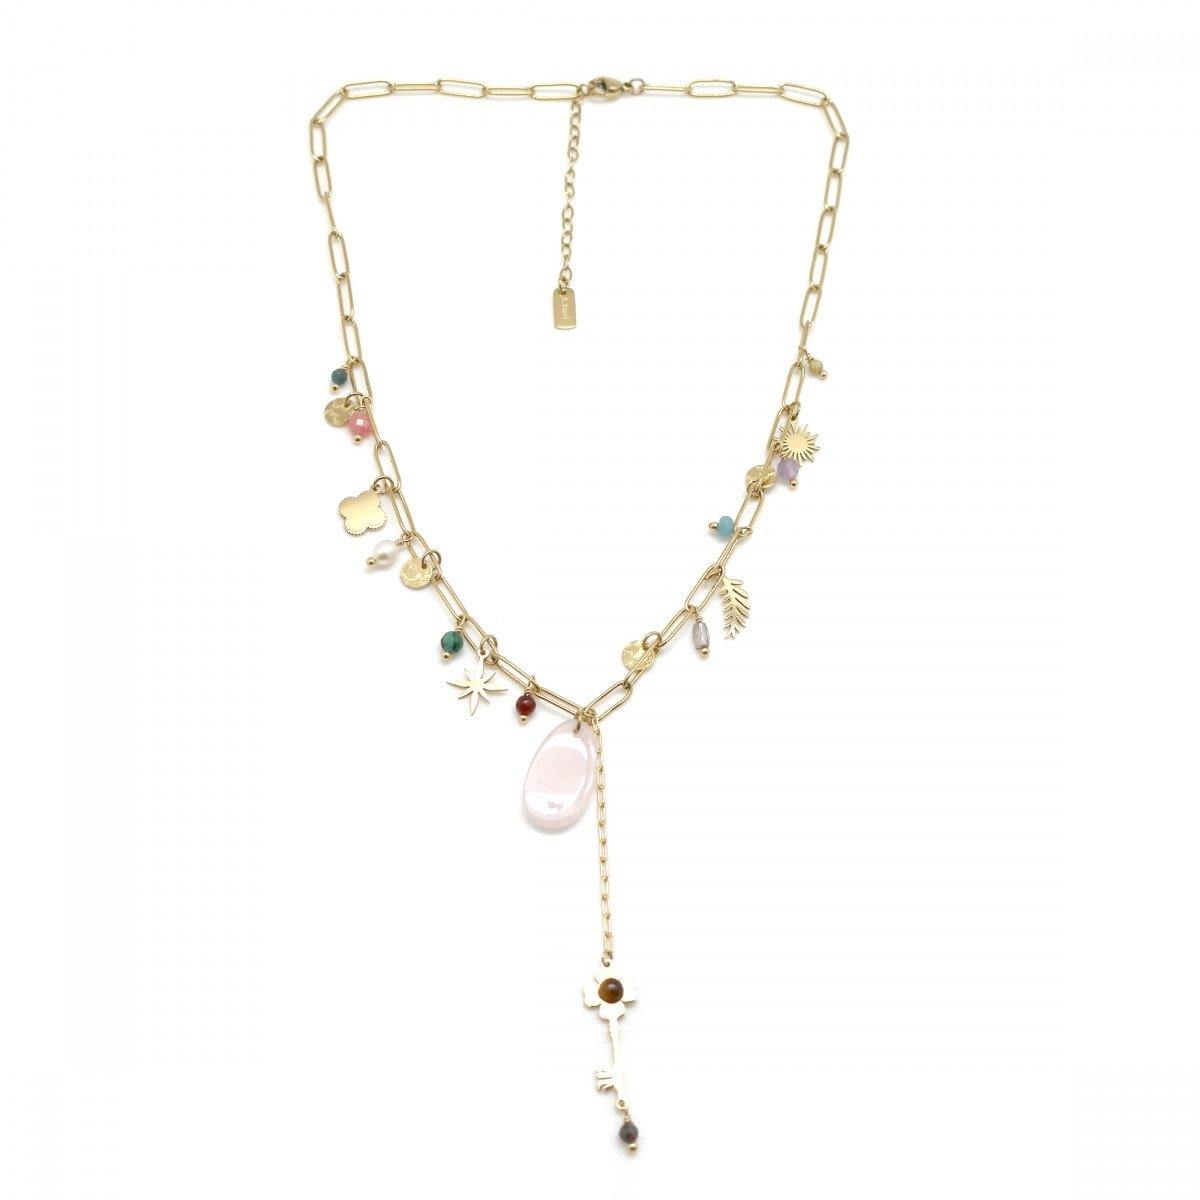 Habana Paris Chain Short Necklace / Stainless Steel, Pearl, Natural Stones / Tie Necklace / Flower Pendant - JOYasForYou